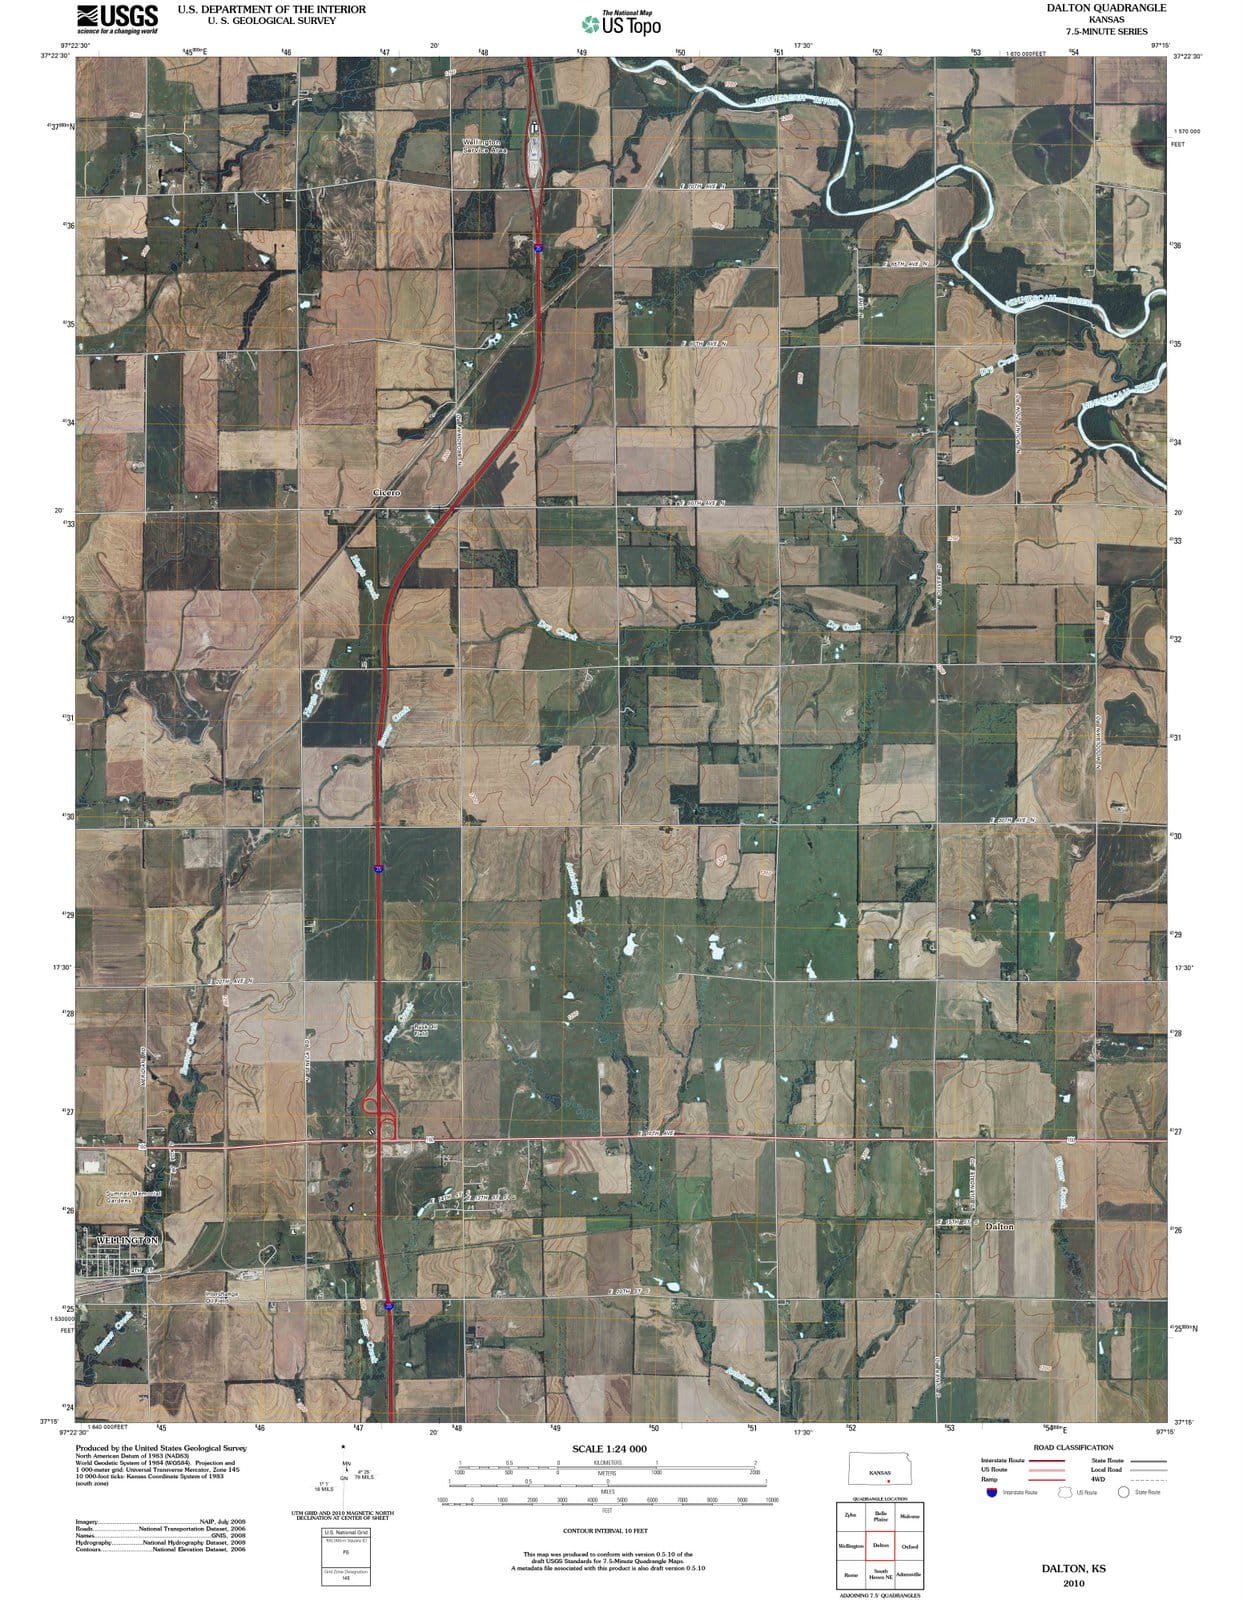 2010 Dalton, KS - Kansas - USGS Topographic Map